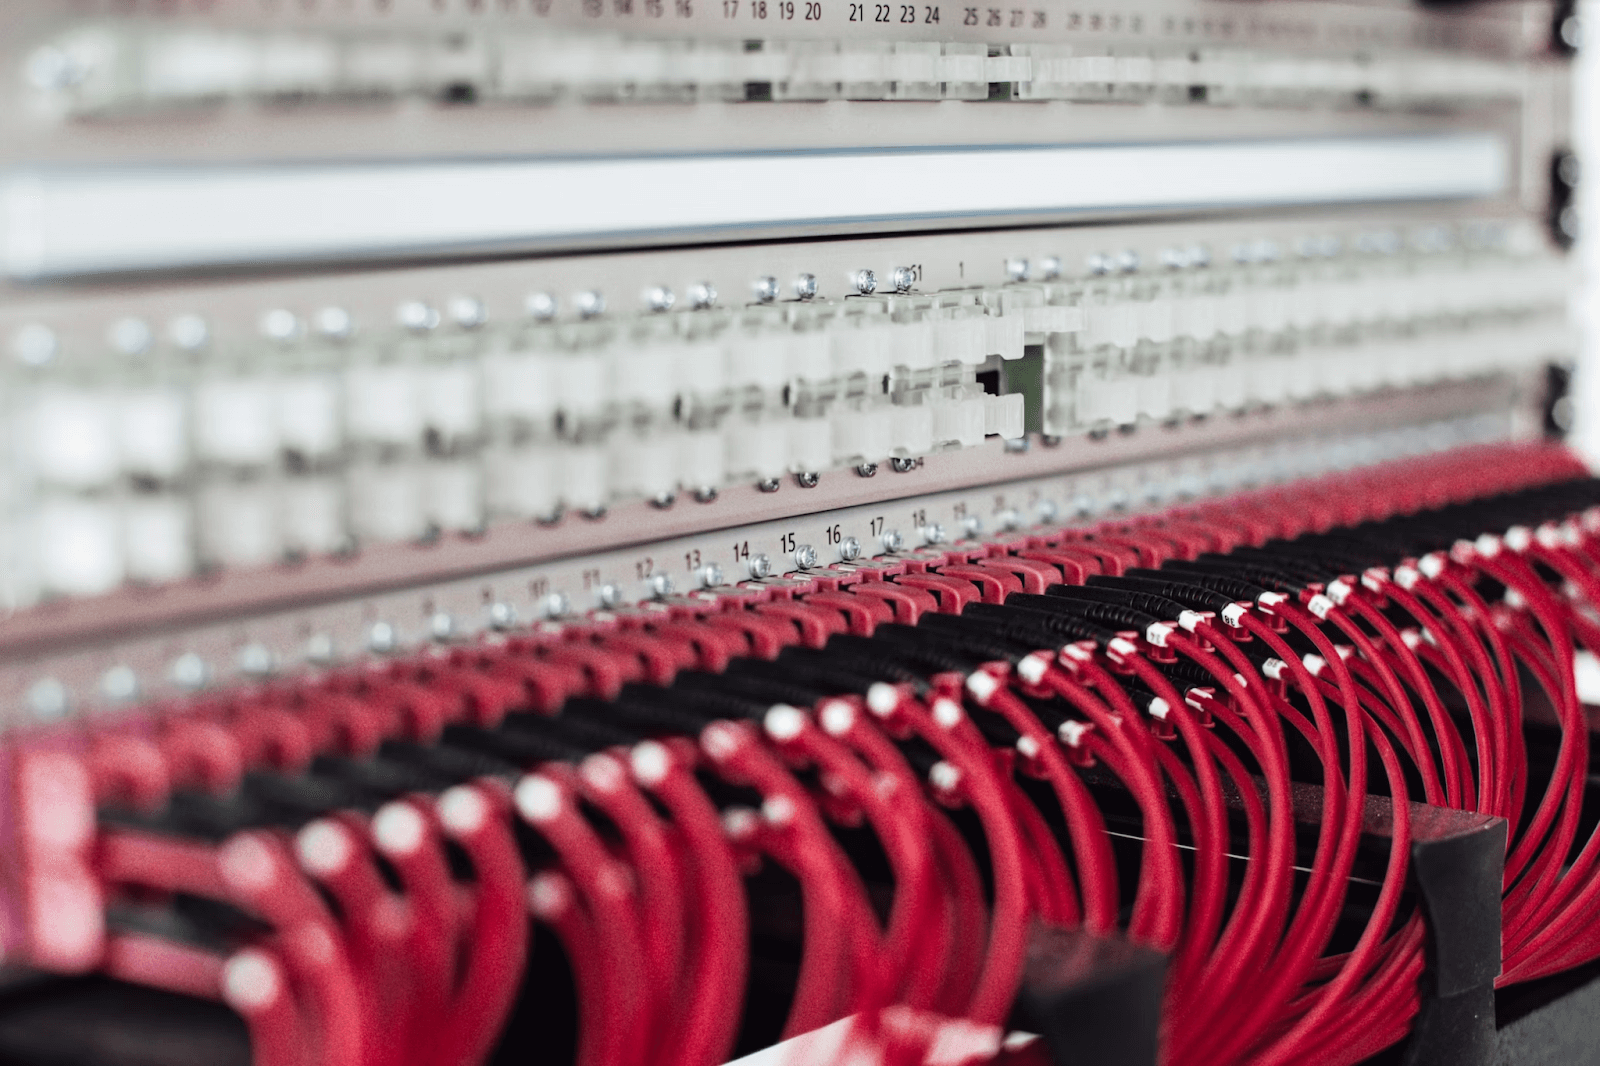 A server rack